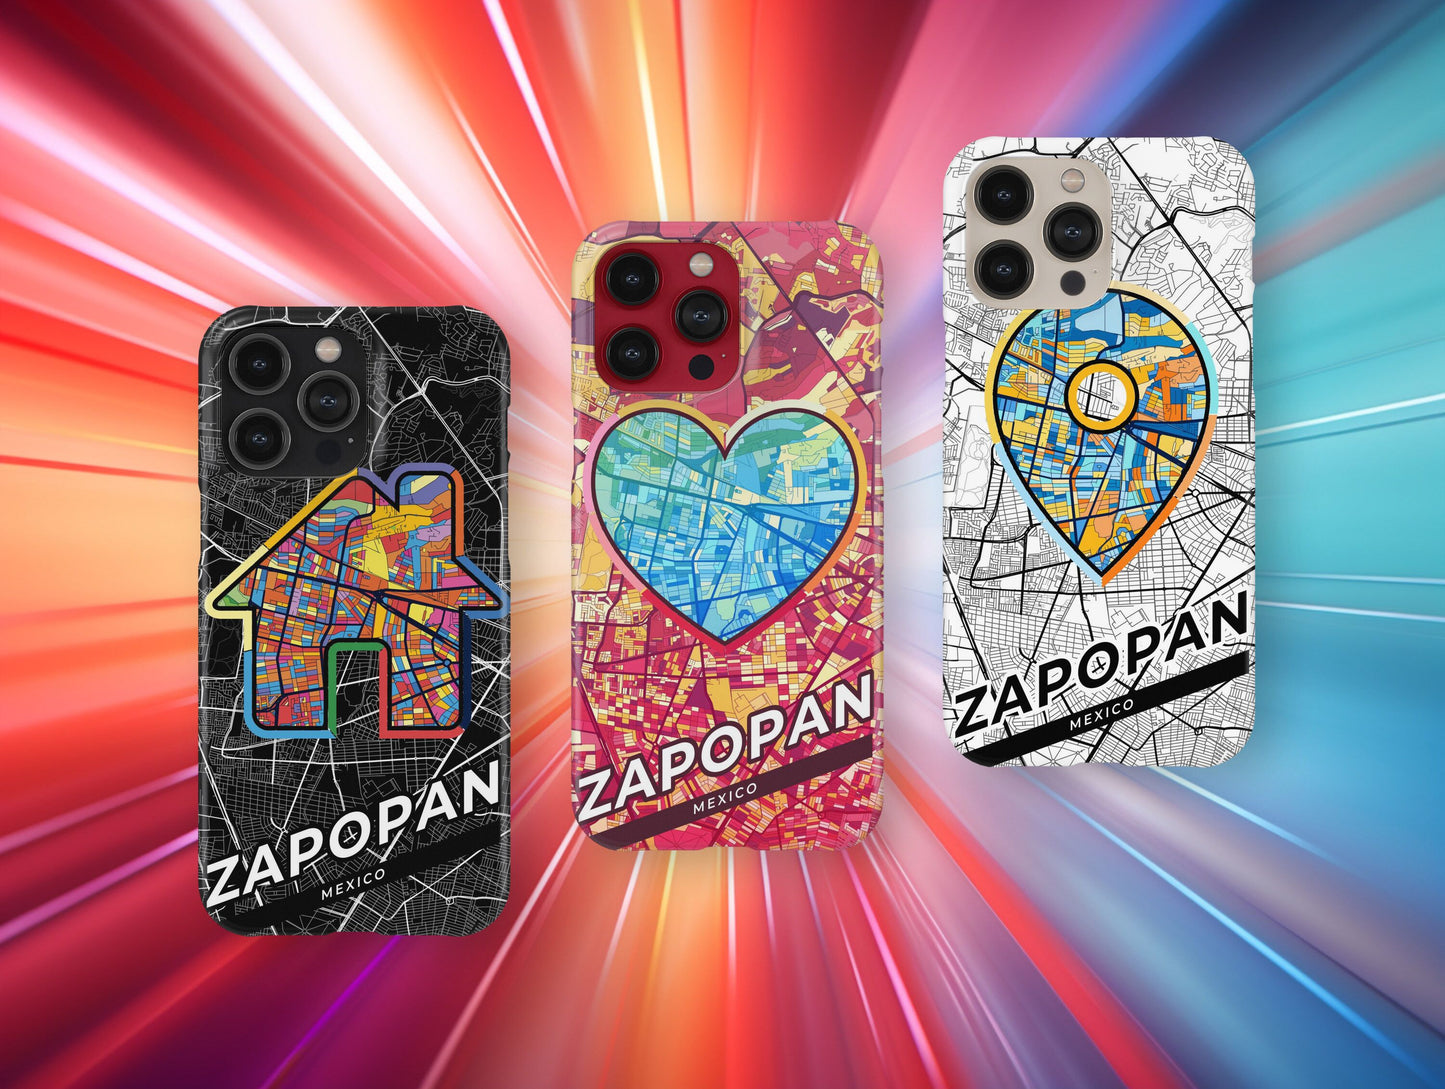 Zapopan Mexico slim phone case with colorful icon